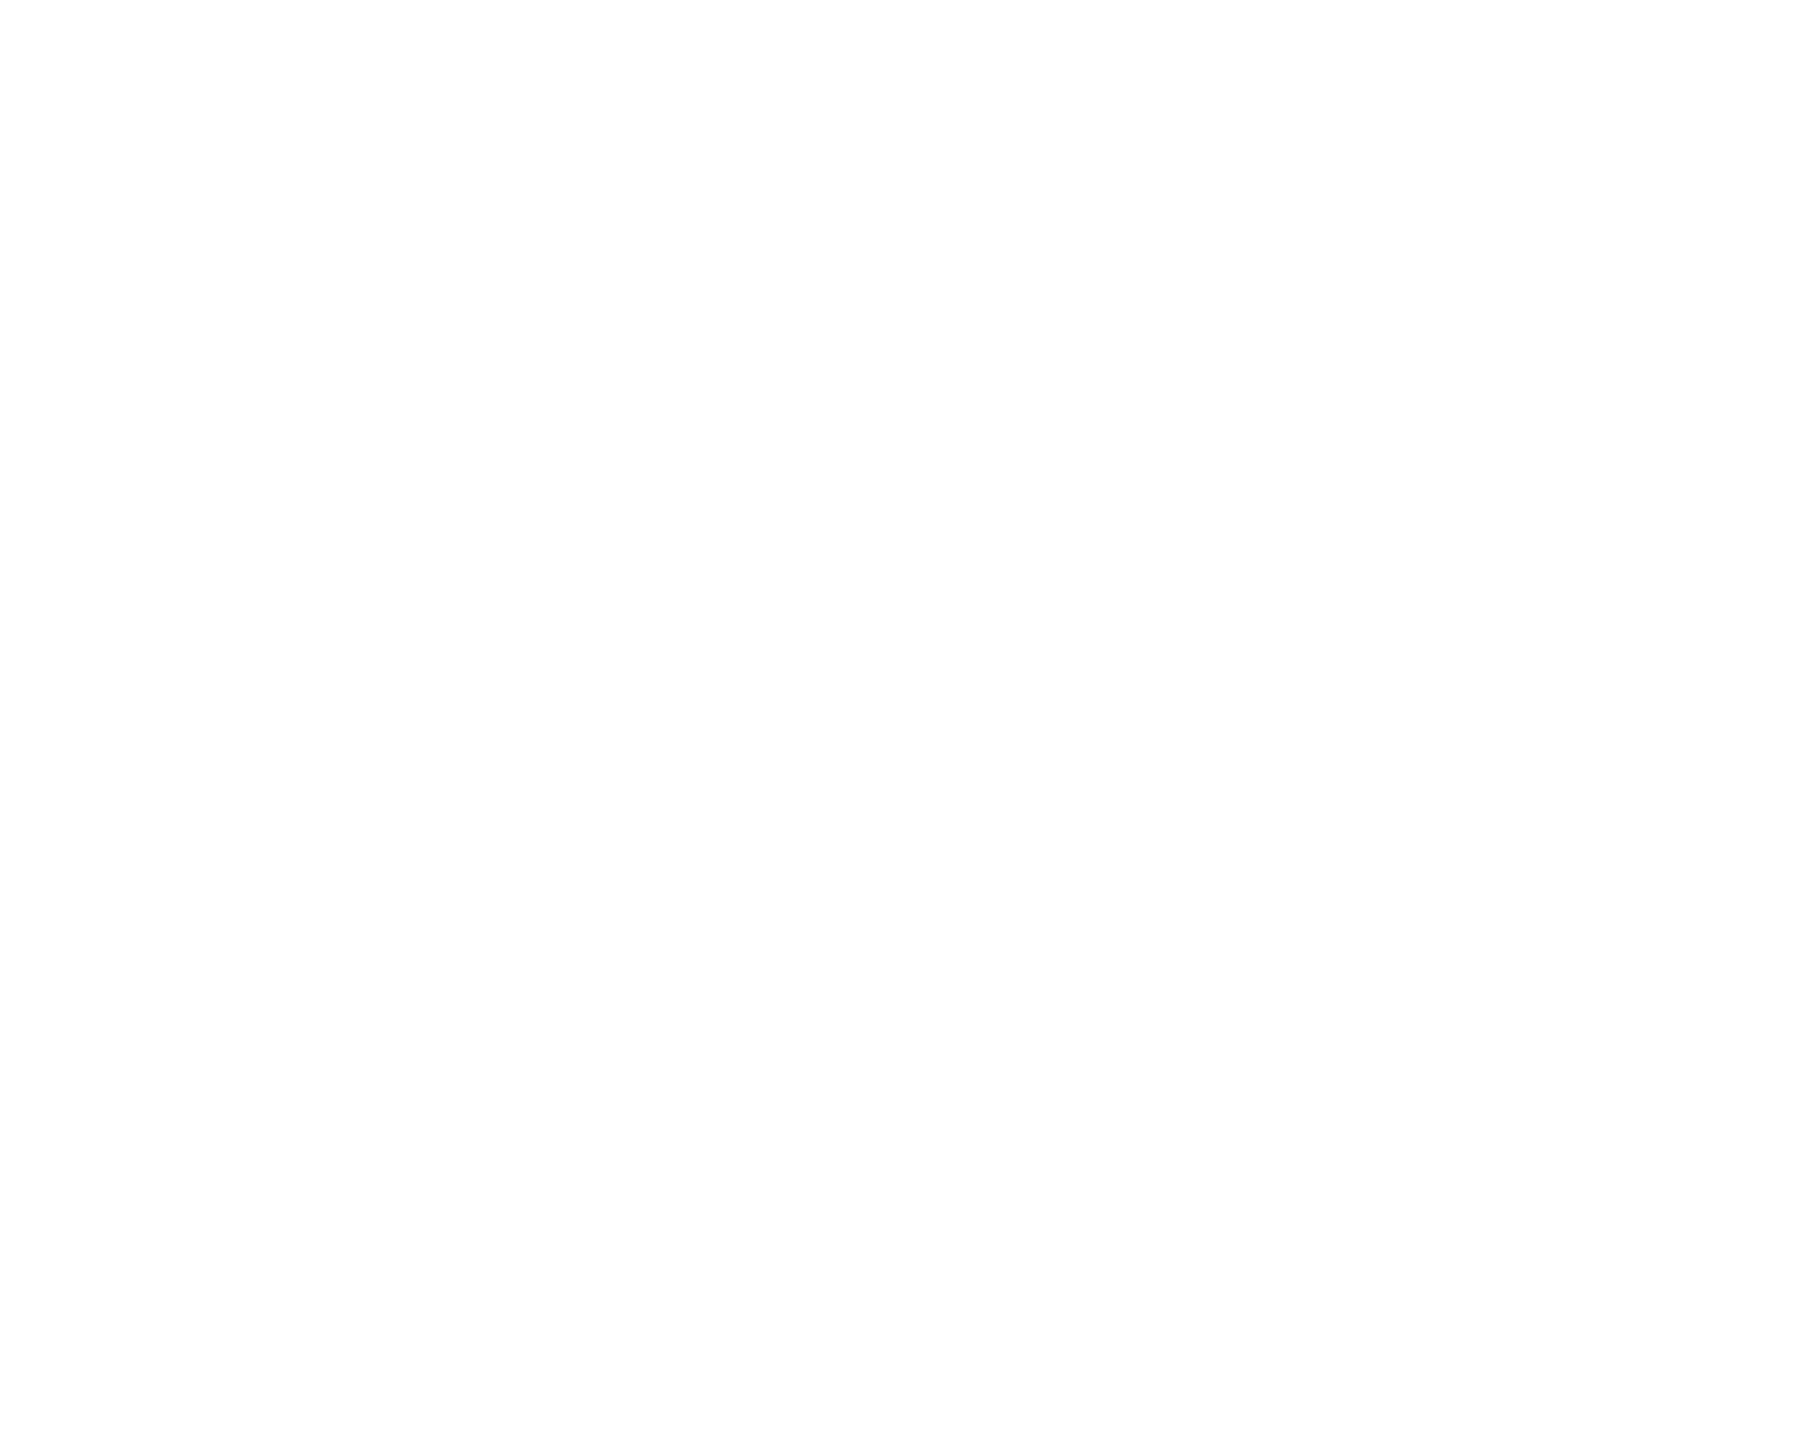 Hotel Planner